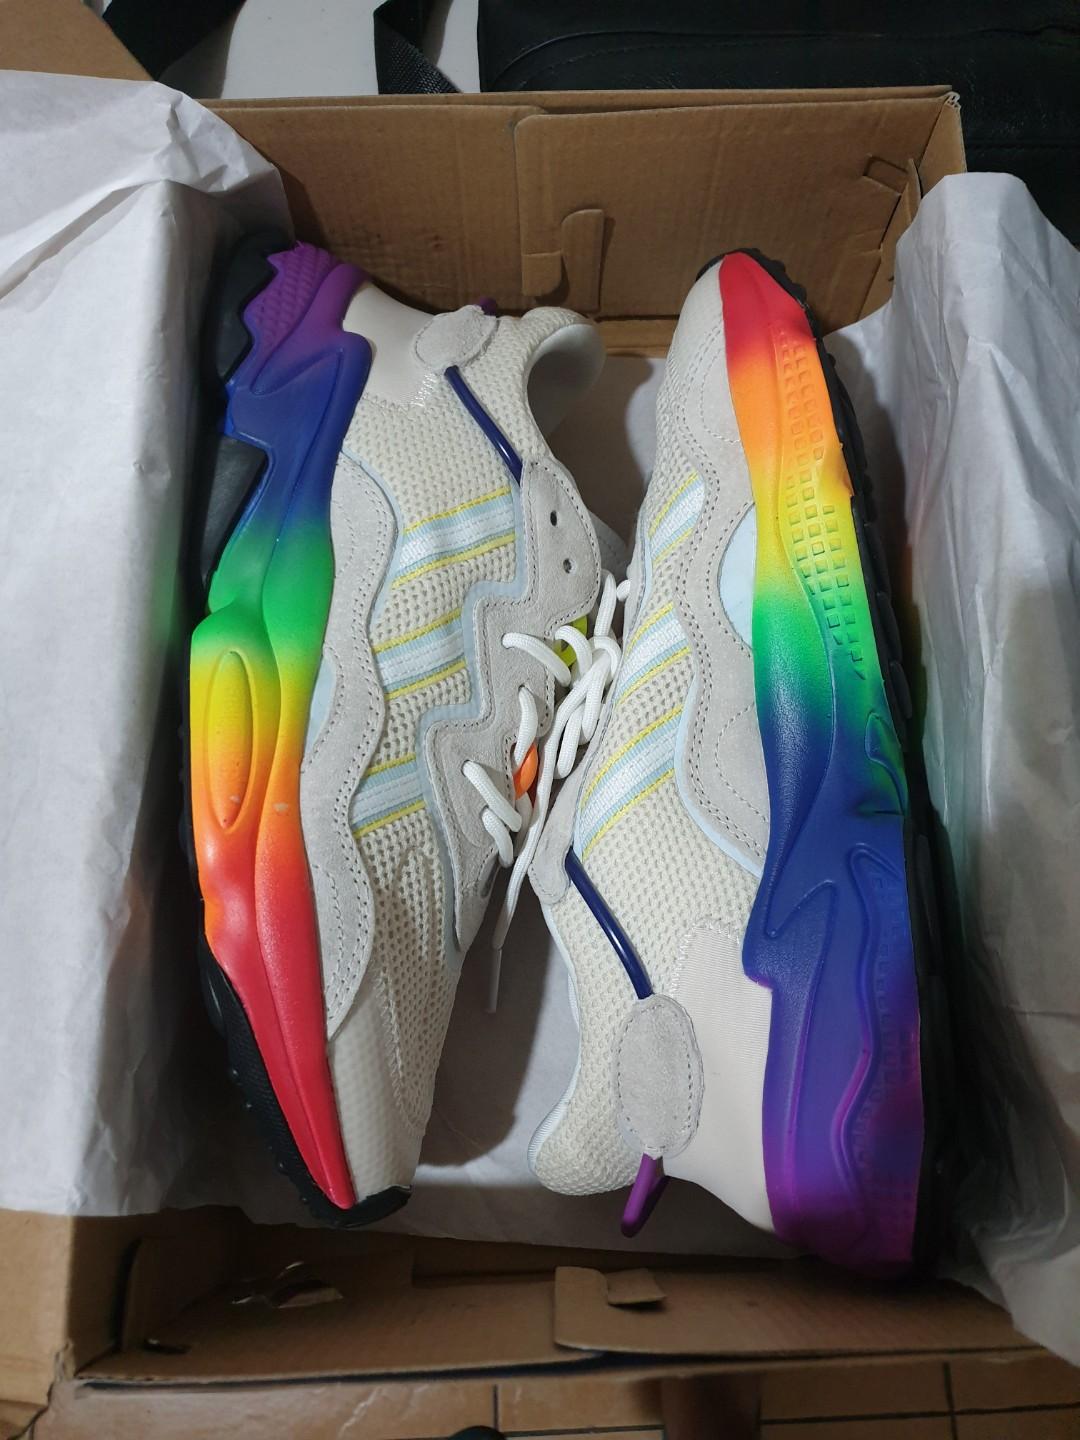 adidas ozweego pride shoes